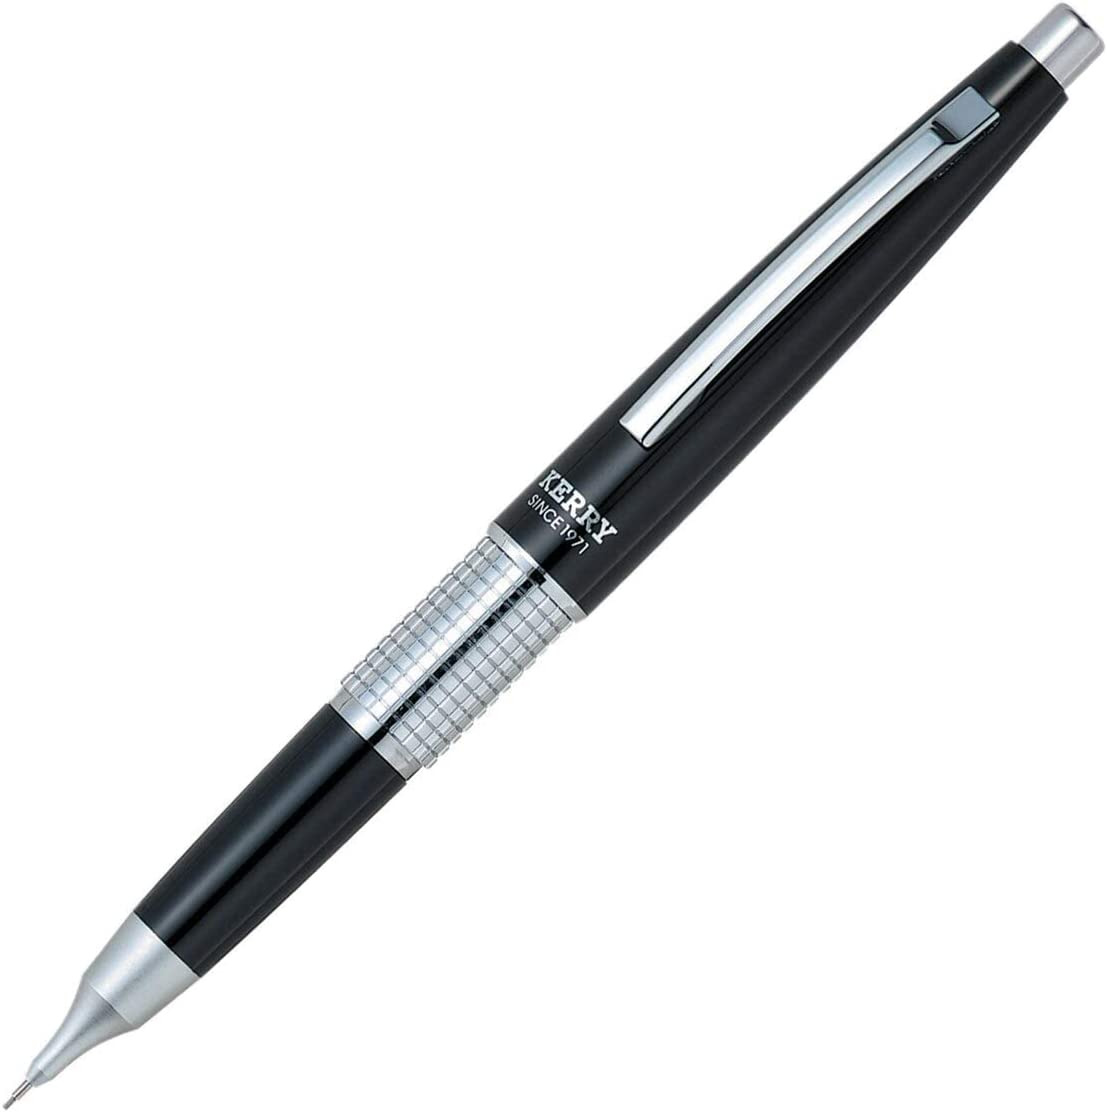 Sharp Kerry 0.7mm Mechanical Pencil, Black Barrel